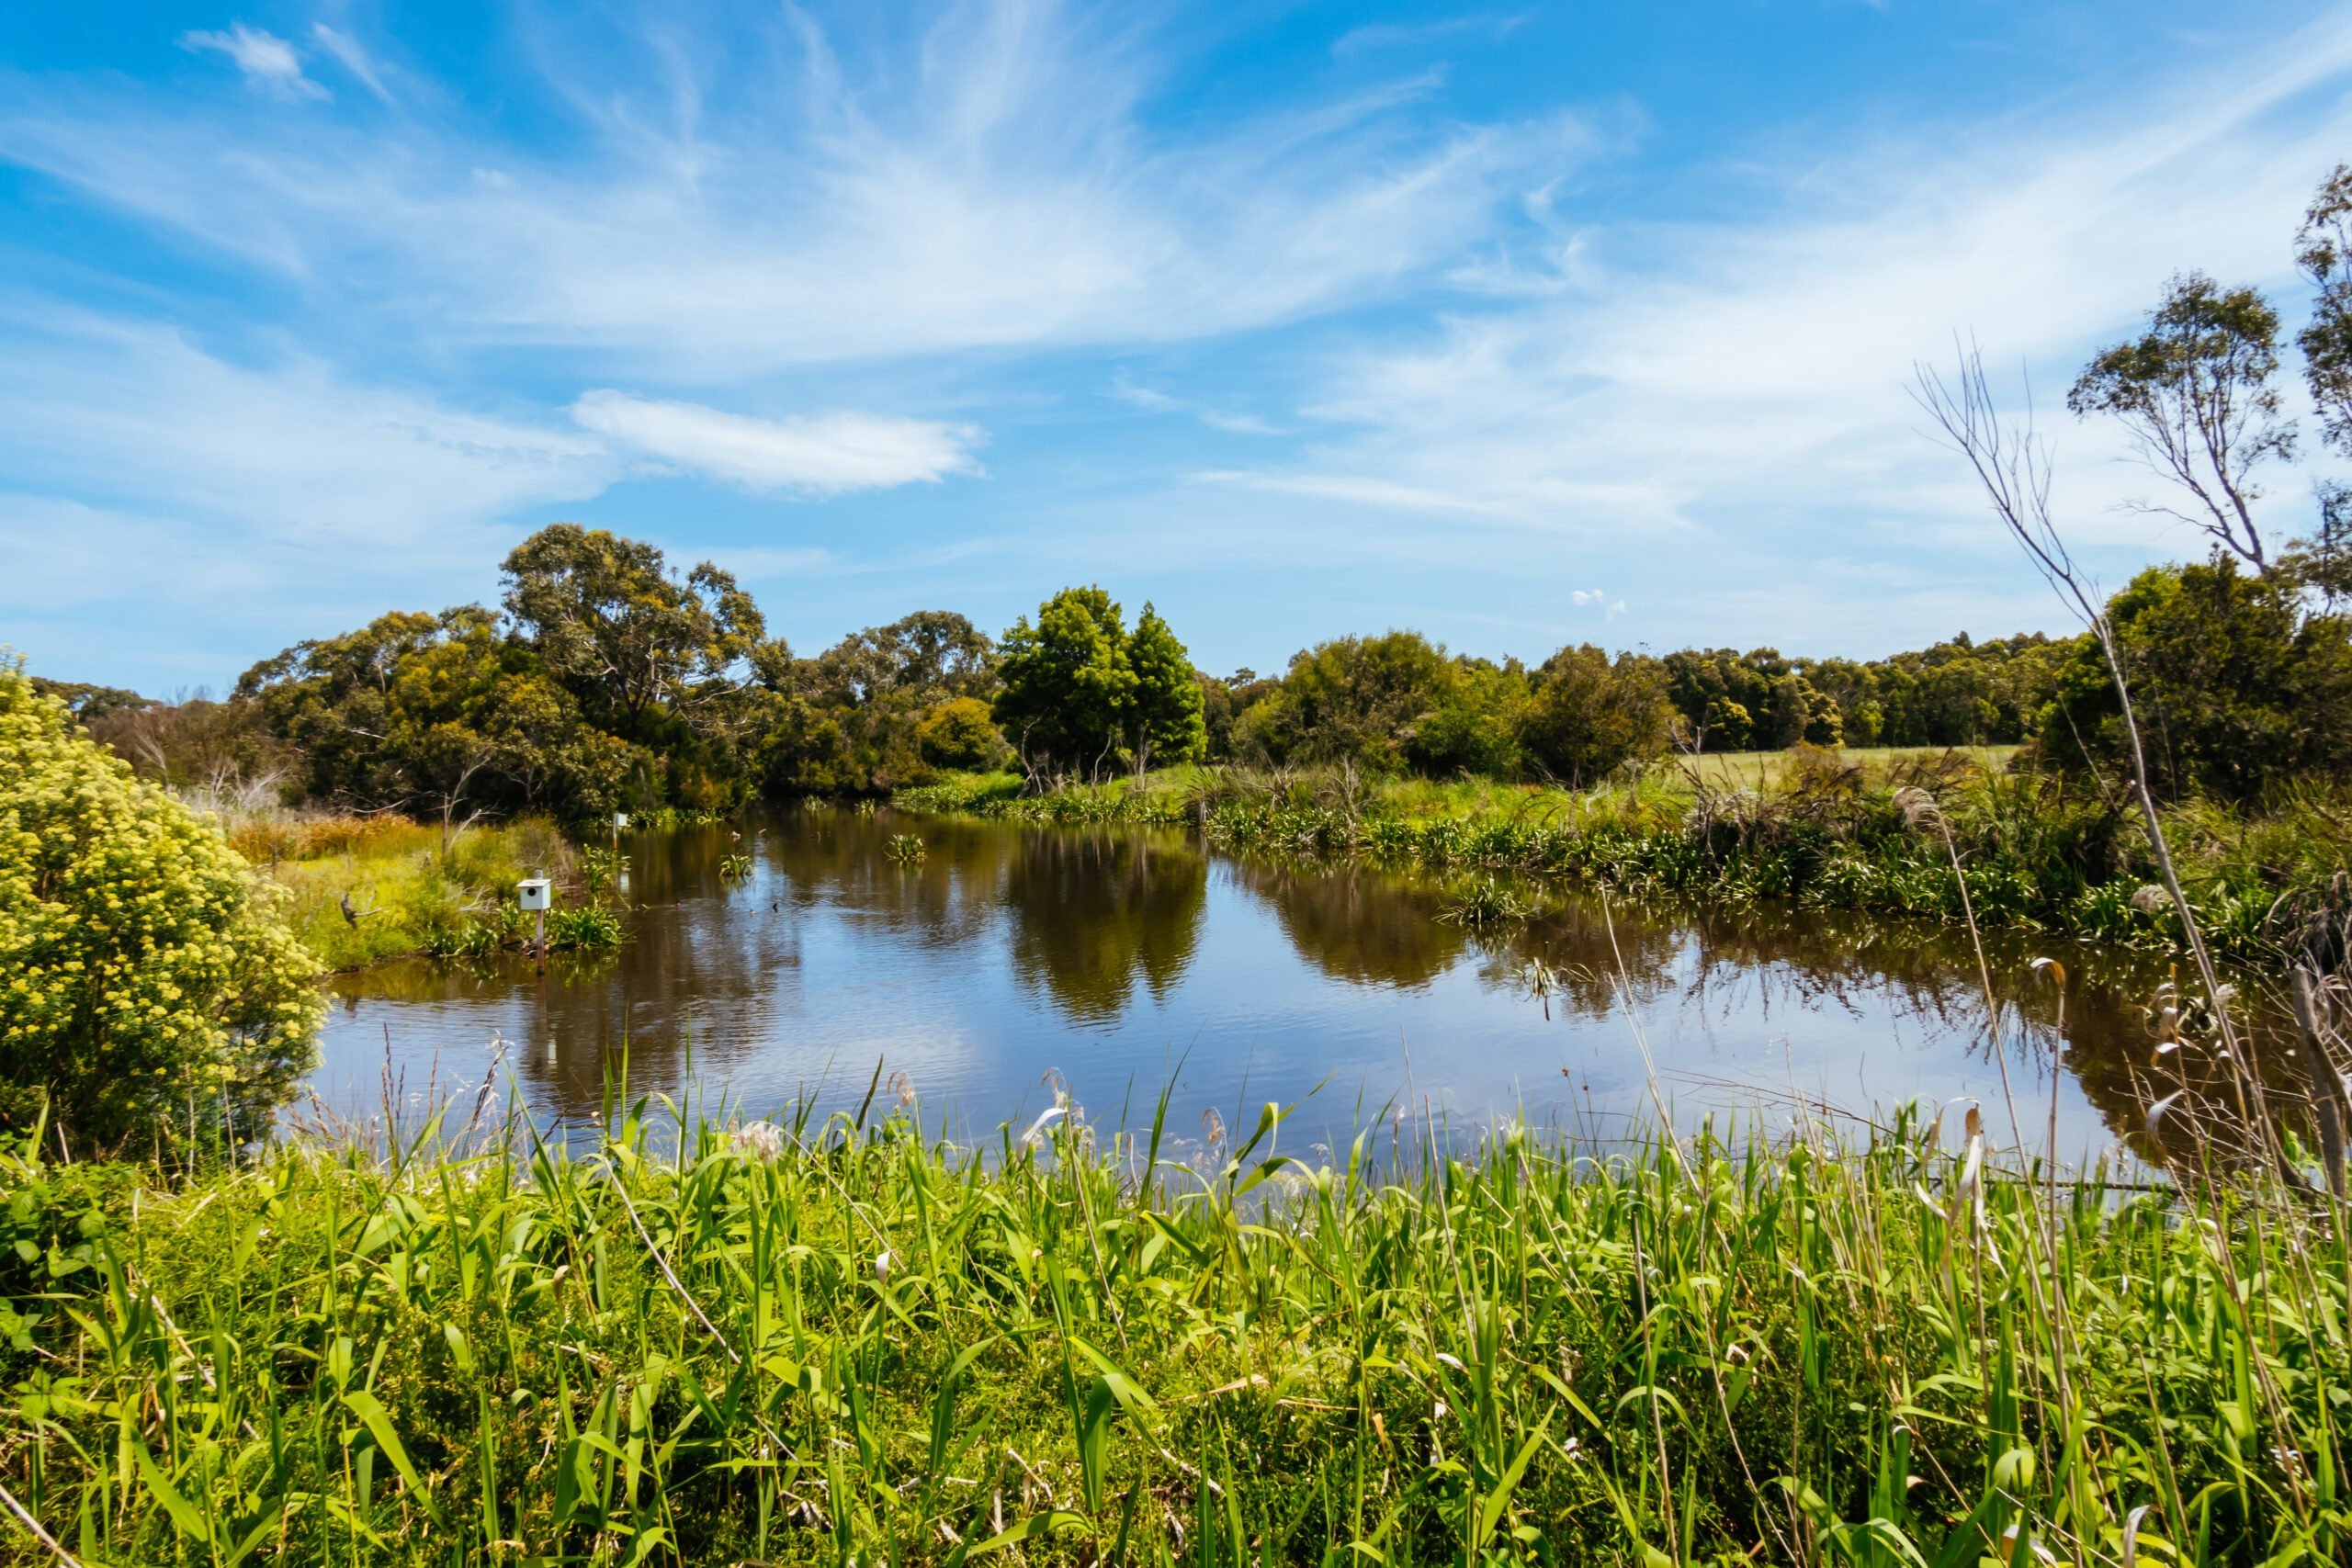 Wetland Regulations 101 for Stormwater Professionals